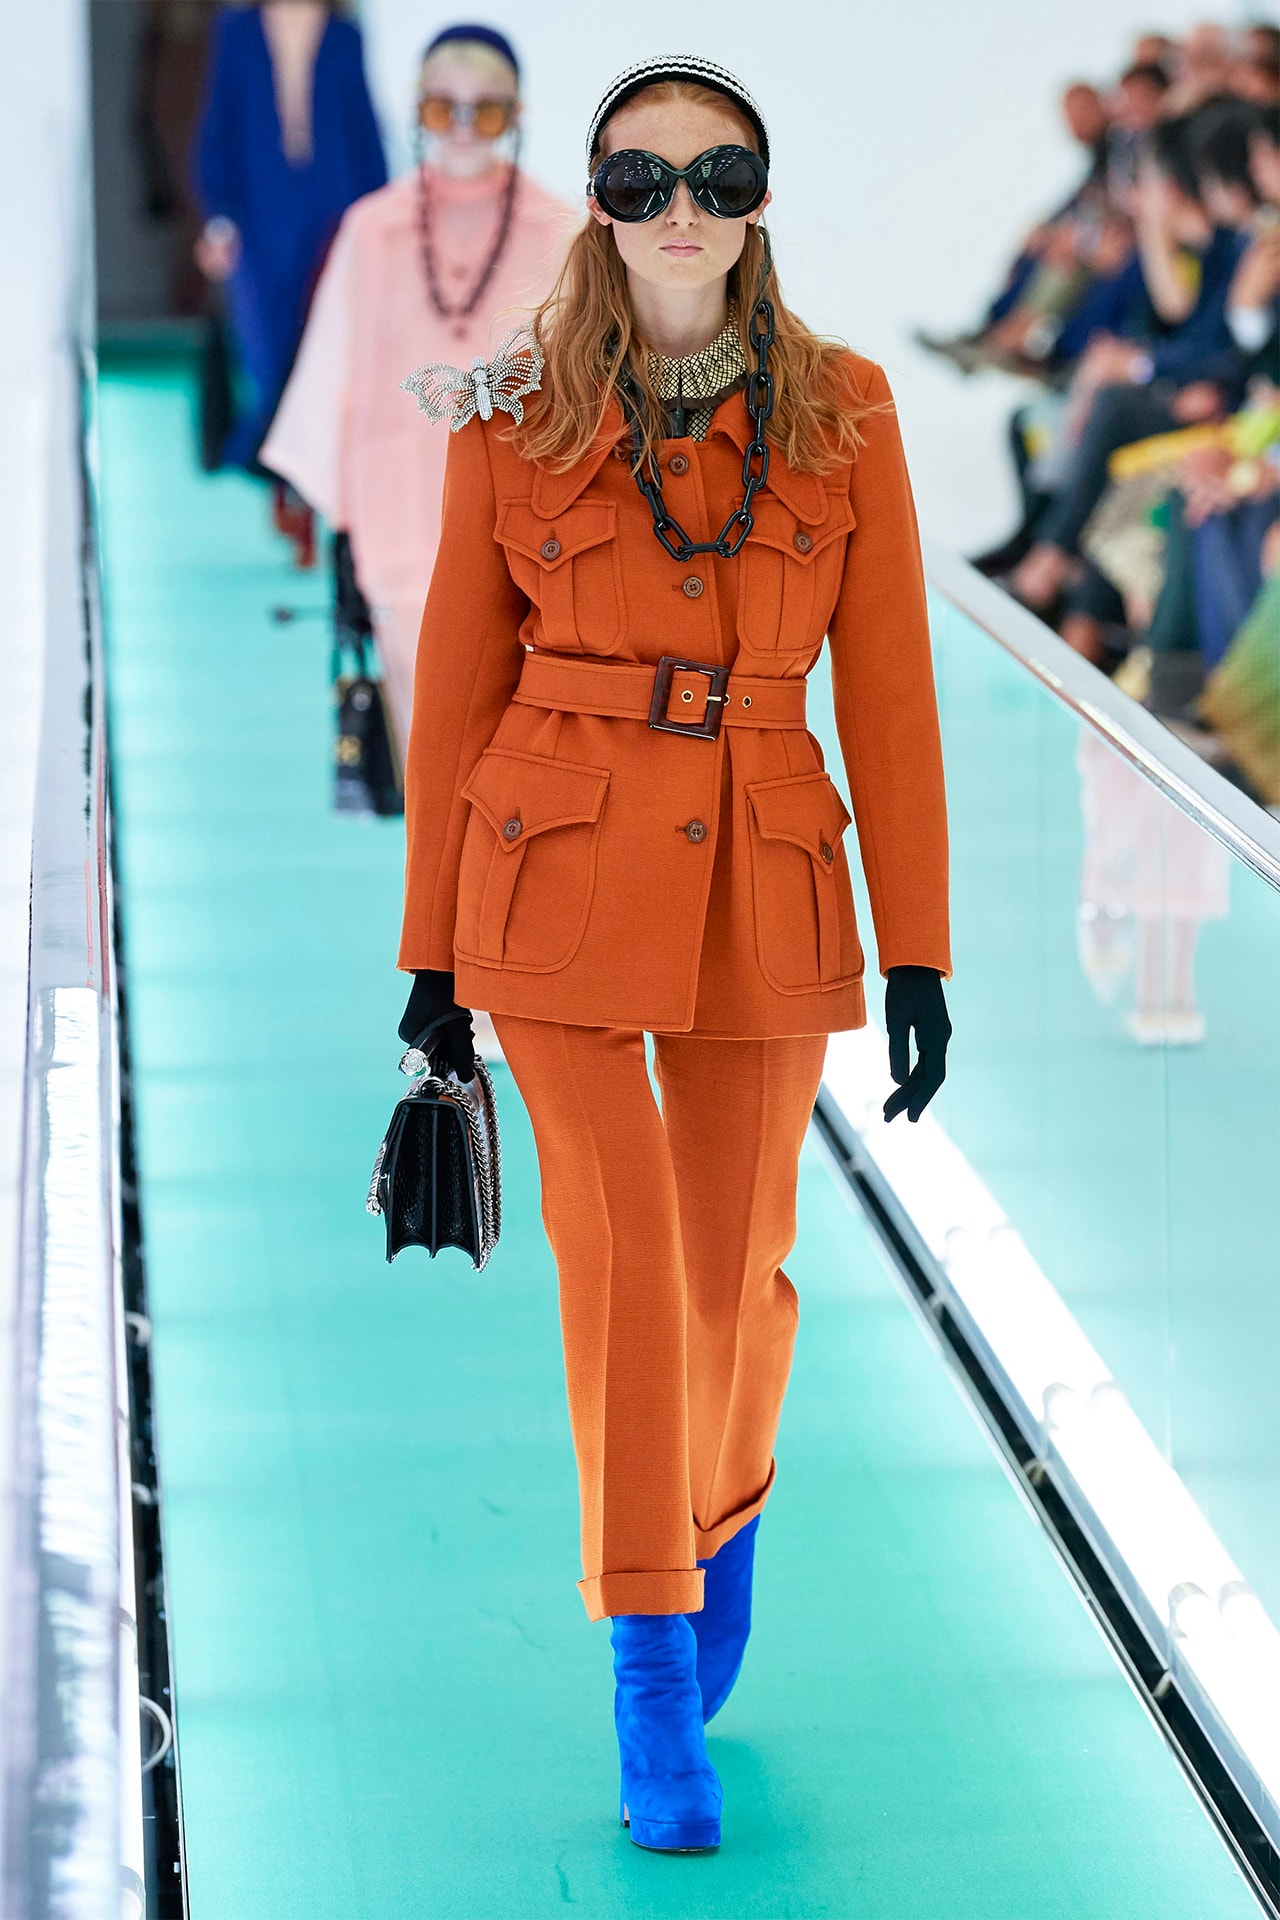 Gucci Orgasmique Spring Summer 2020 Runway Show Milan Fashion Week SS20 orange suit